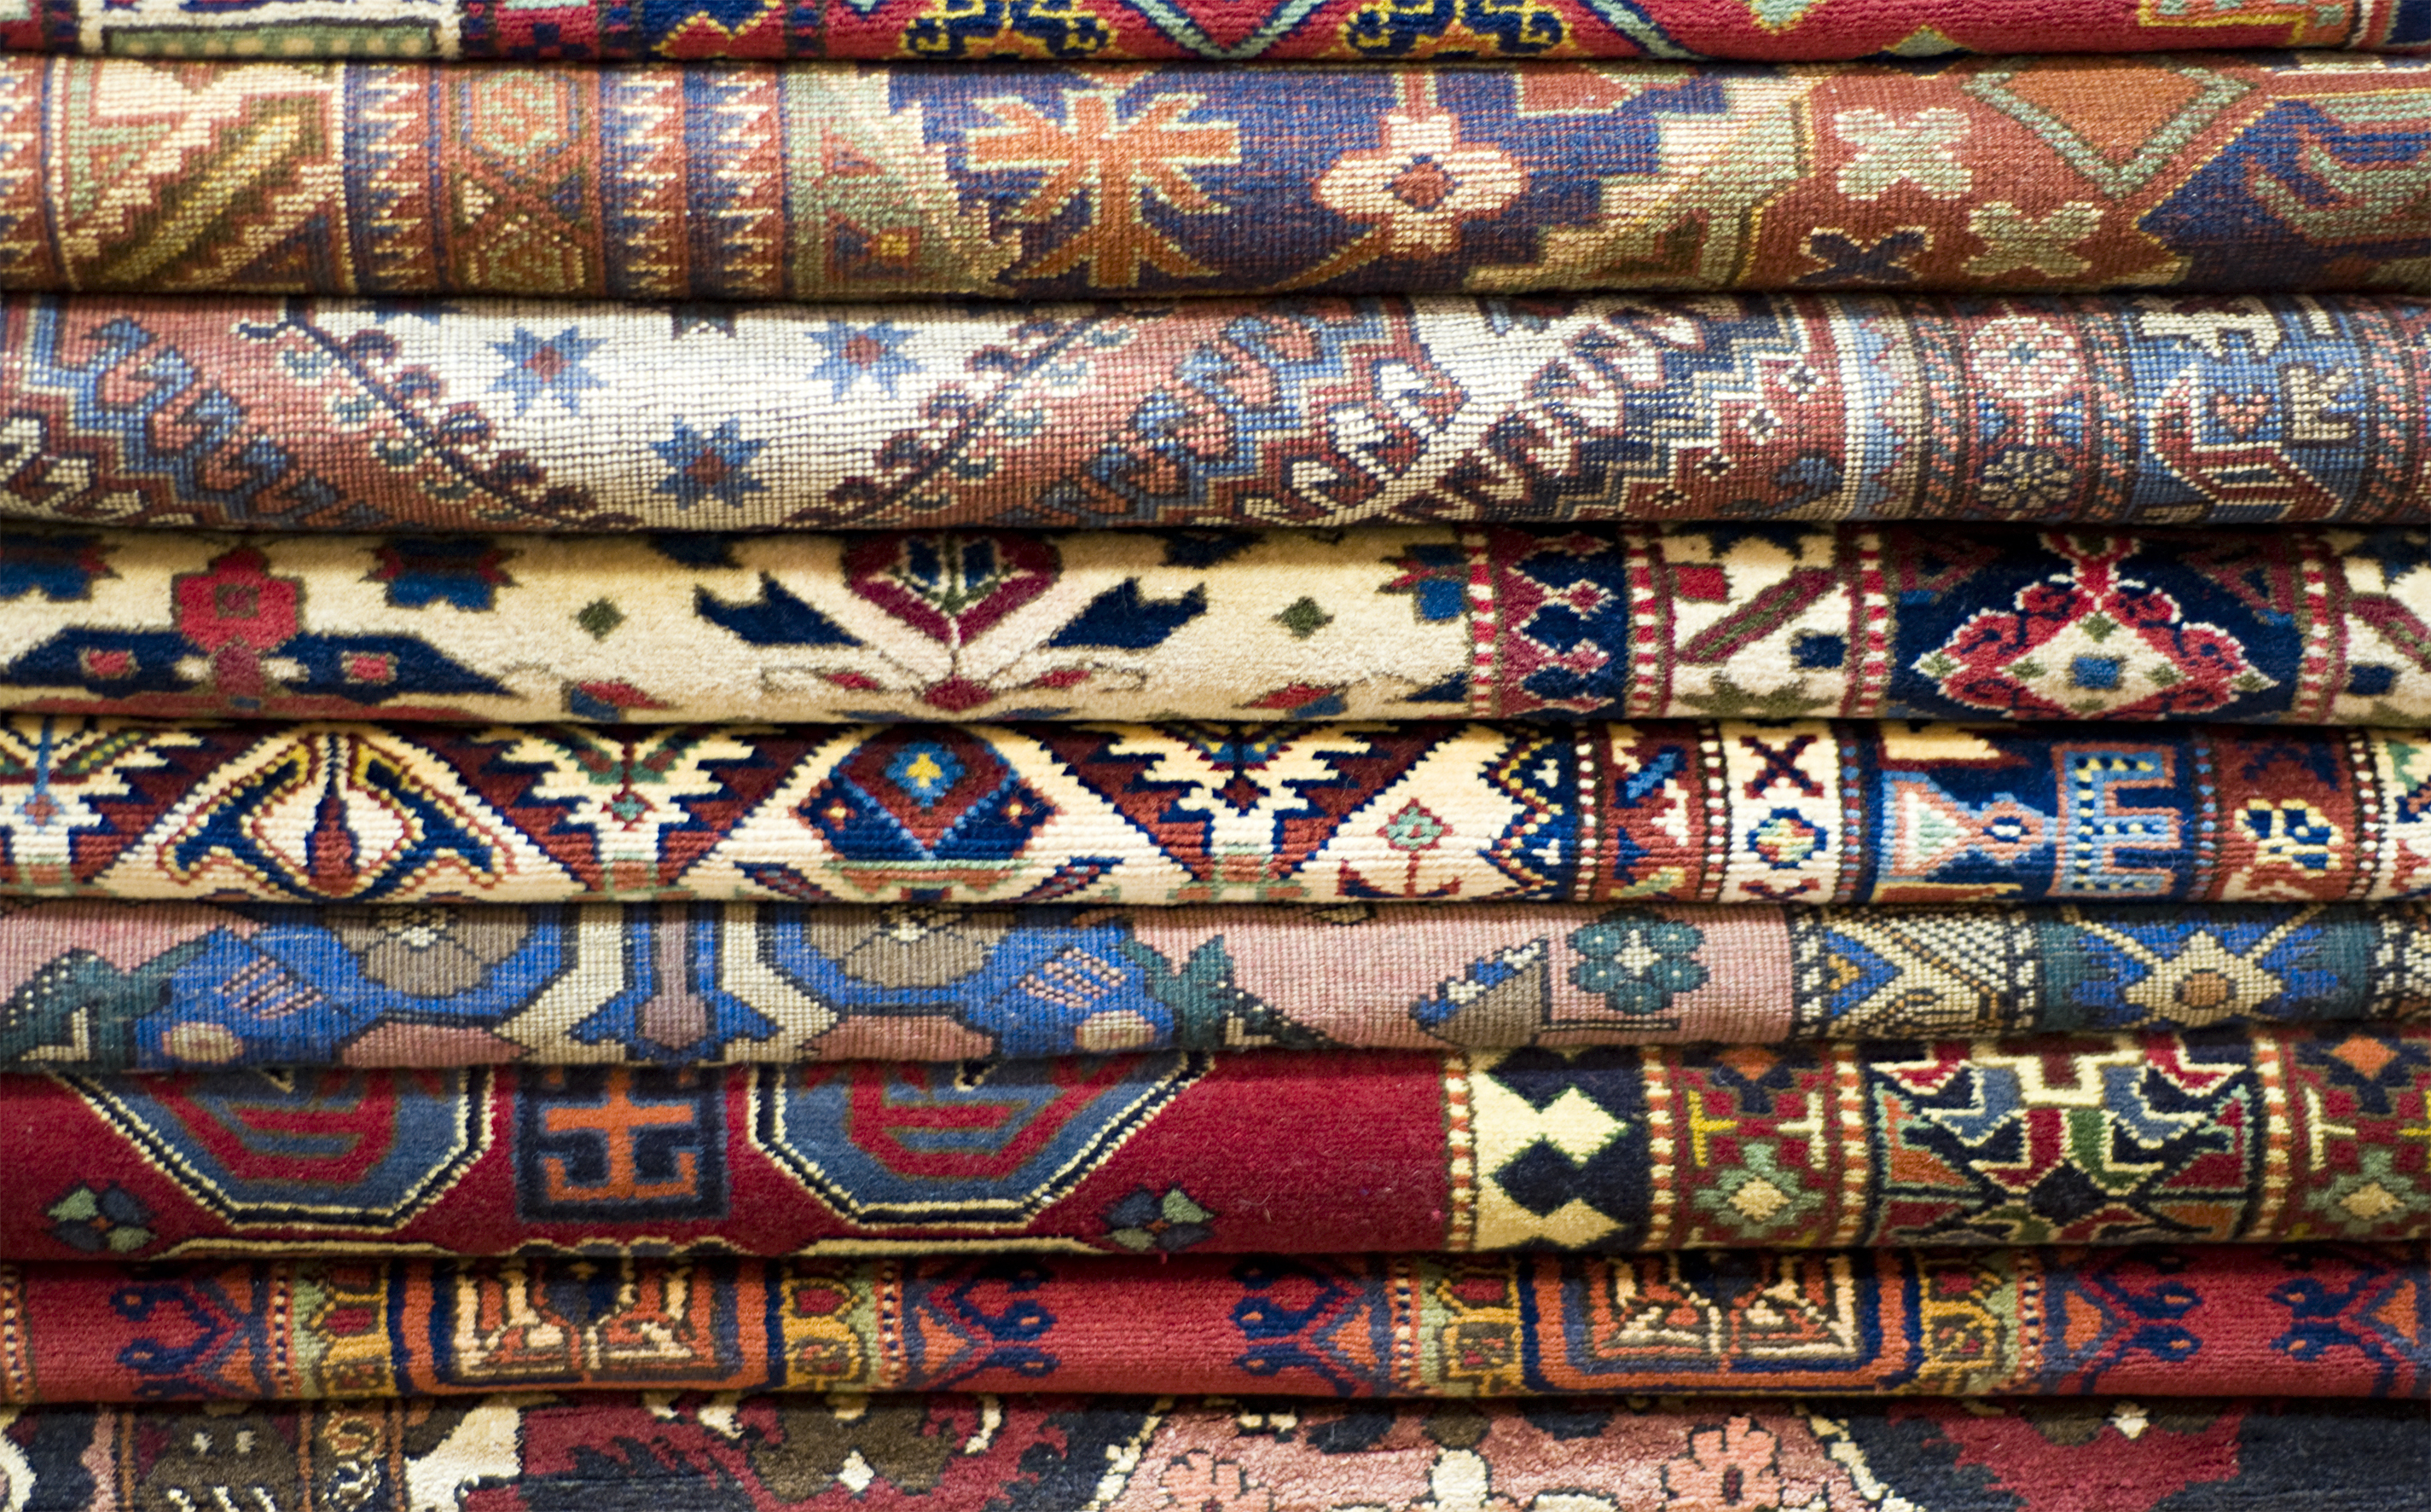 Pile of rugs.